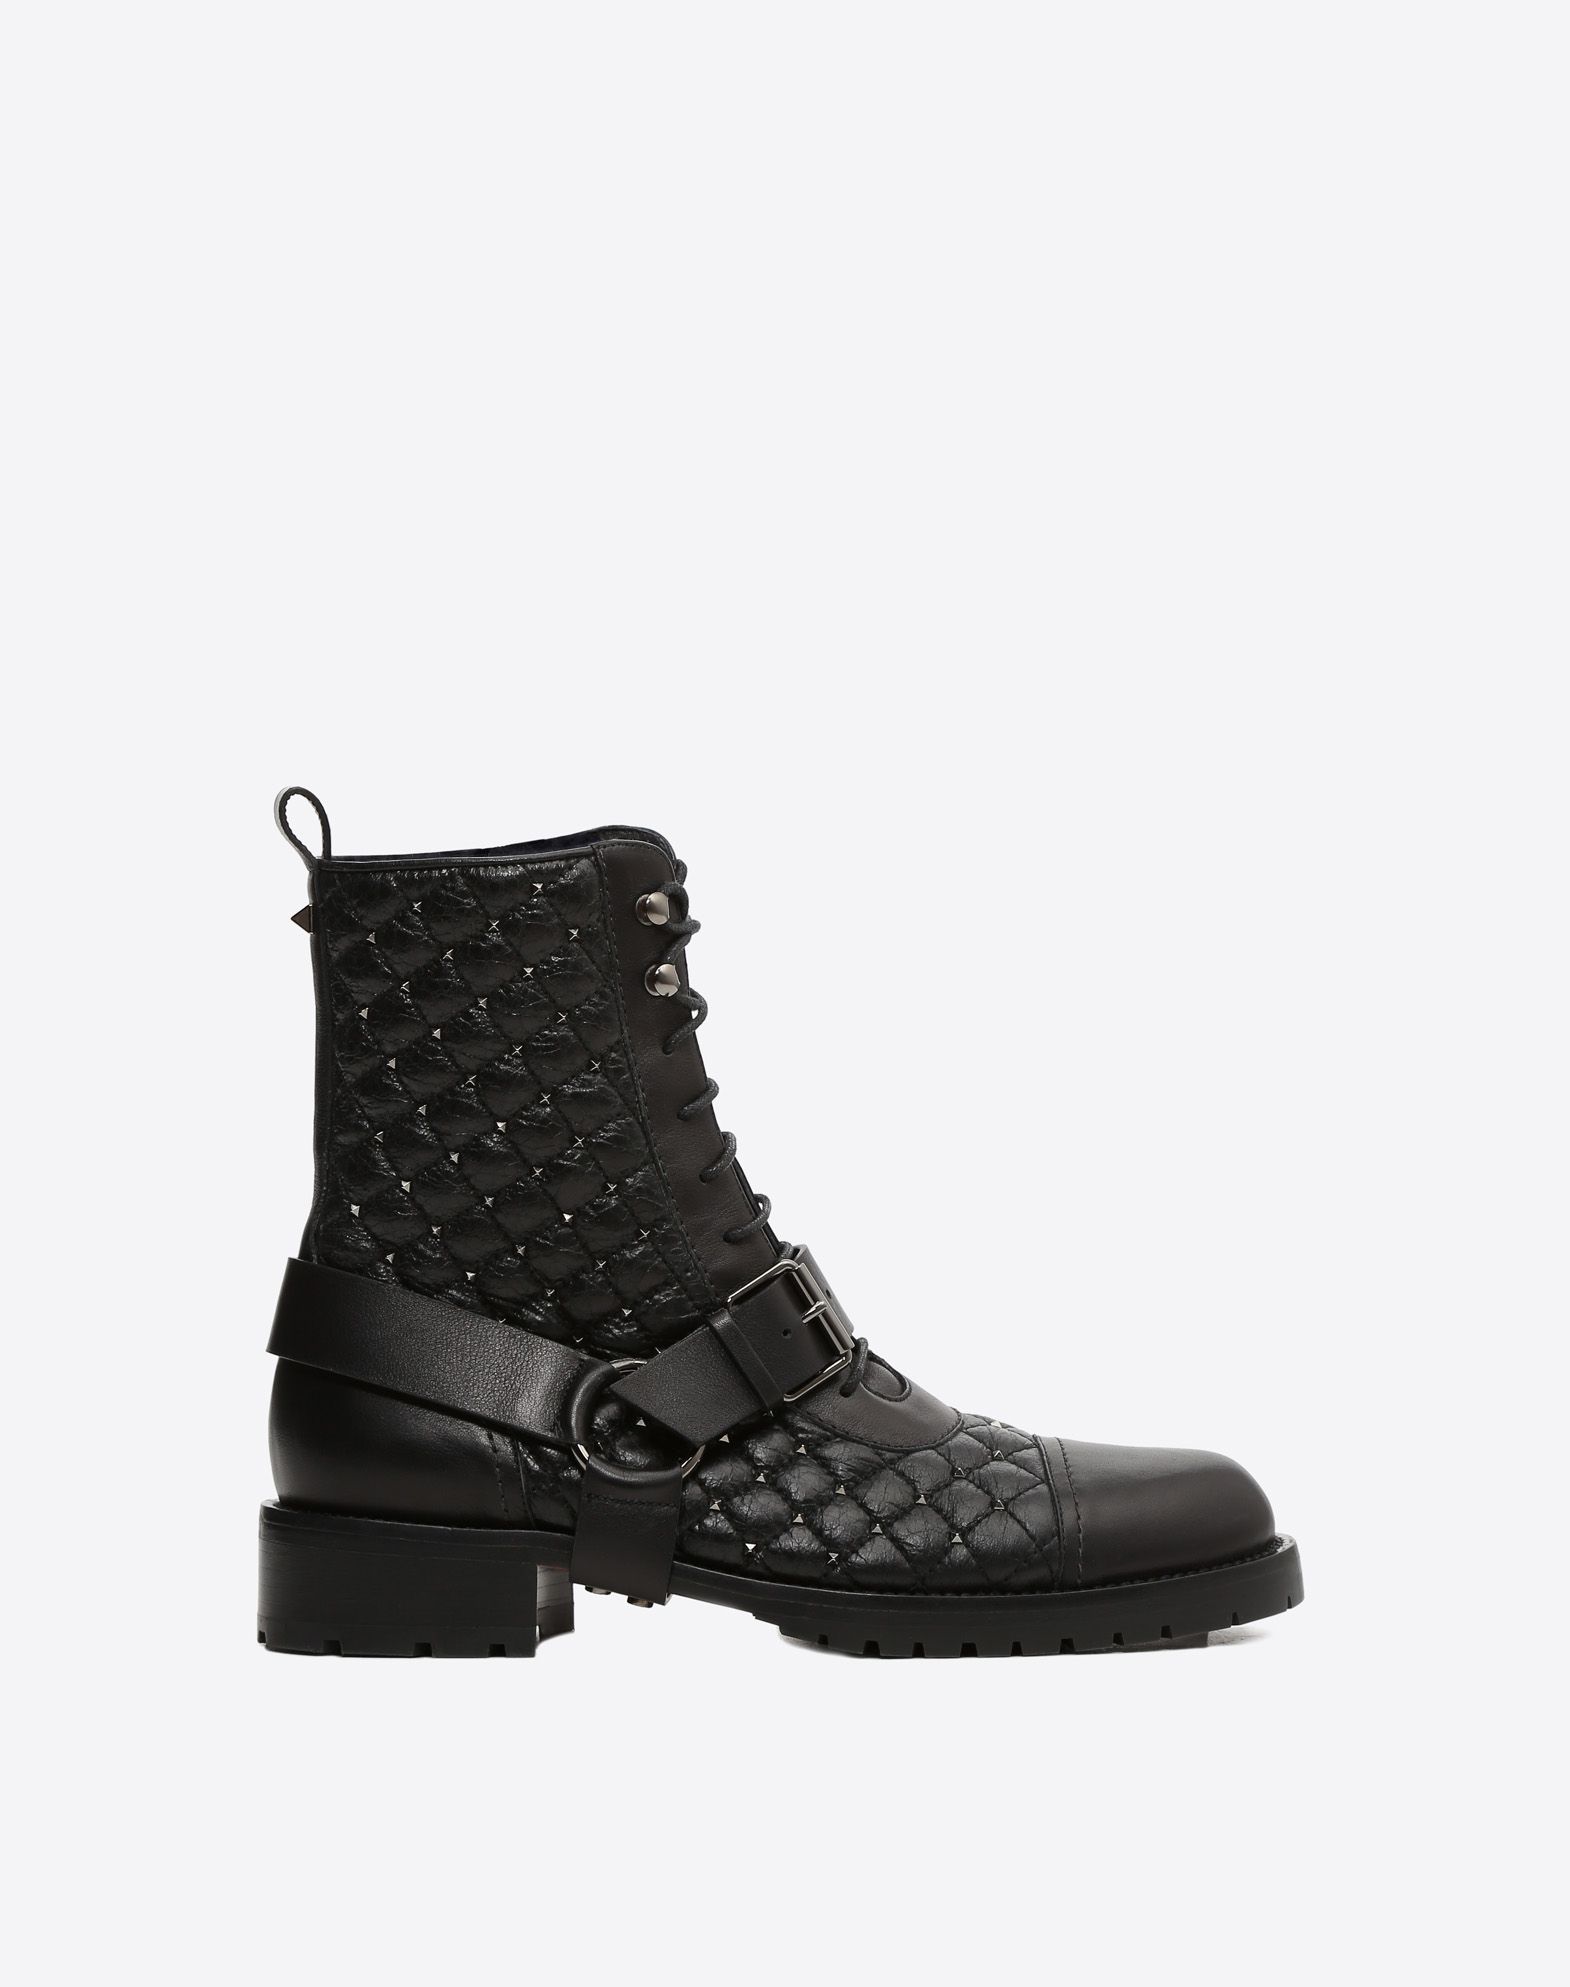 Grund Tegne forsikring slim Rockstud Spike Flat Combat boot for Woman | Valentino Online Boutique